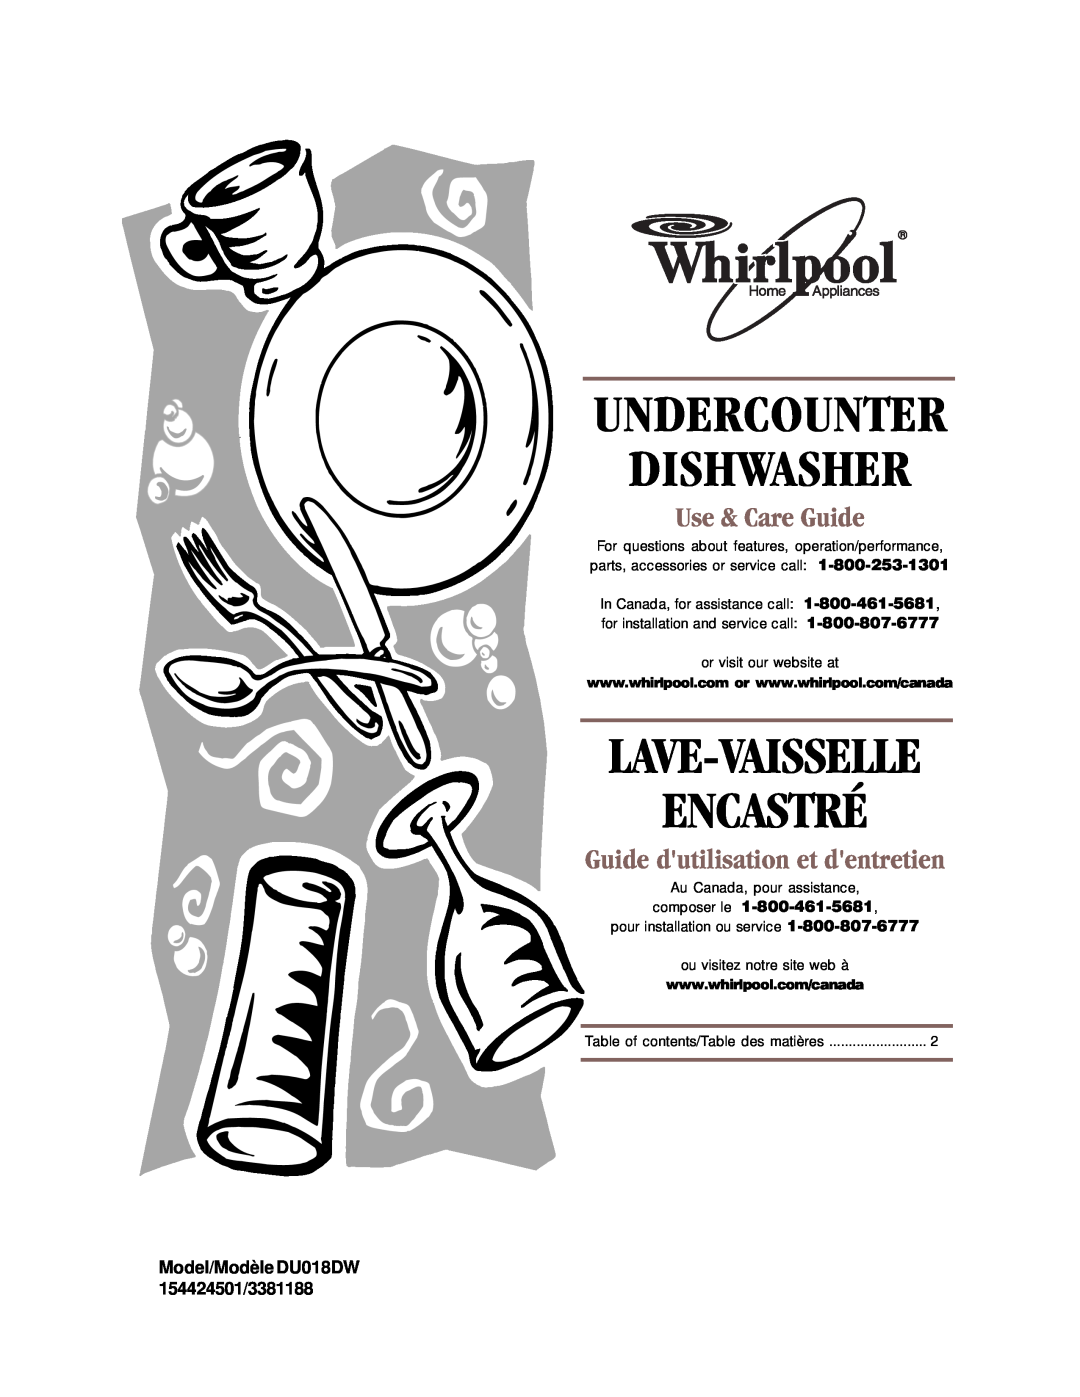 Whirlpool DU018DW manual Use & Care Guide, Guide dutilisation et dentretien, Undercounter Dishwasher 